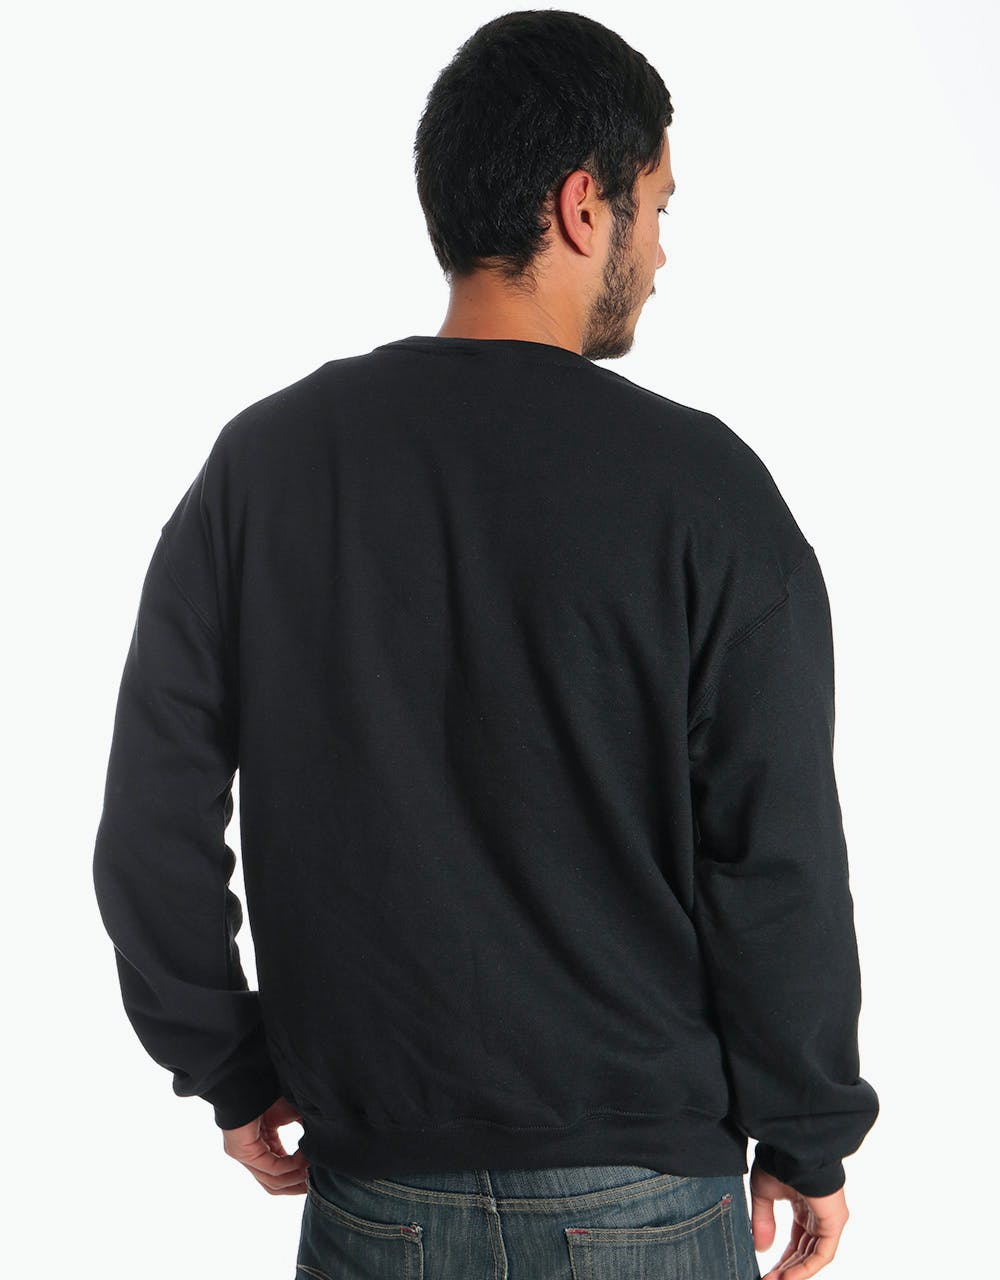 Poetic Collective Sport Crewneck Sweatshirt - Black/White